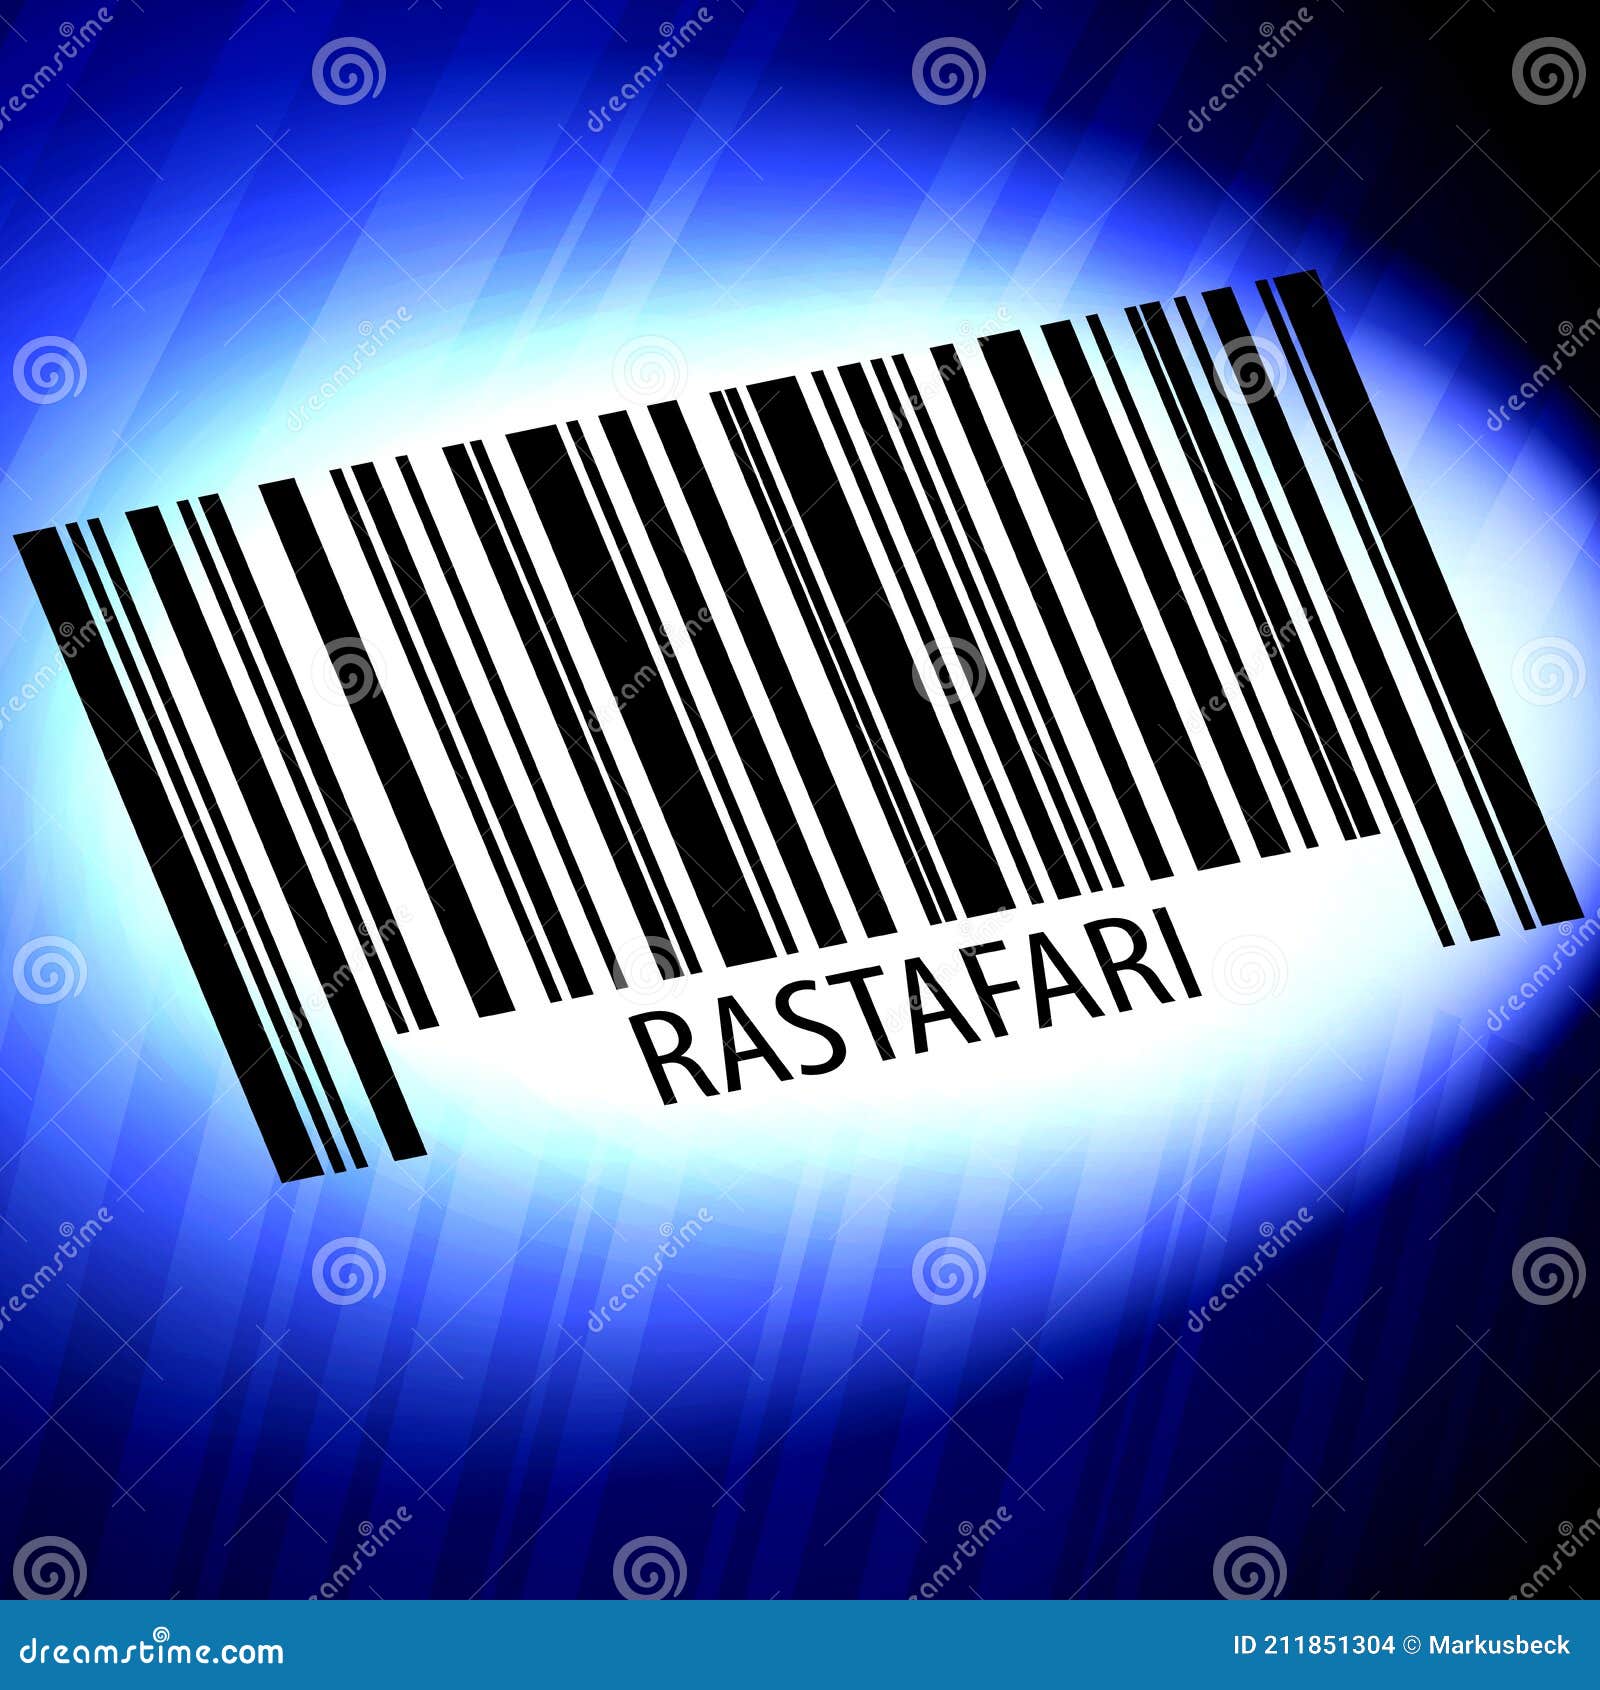 rastafari - barcode with futuristic blue background